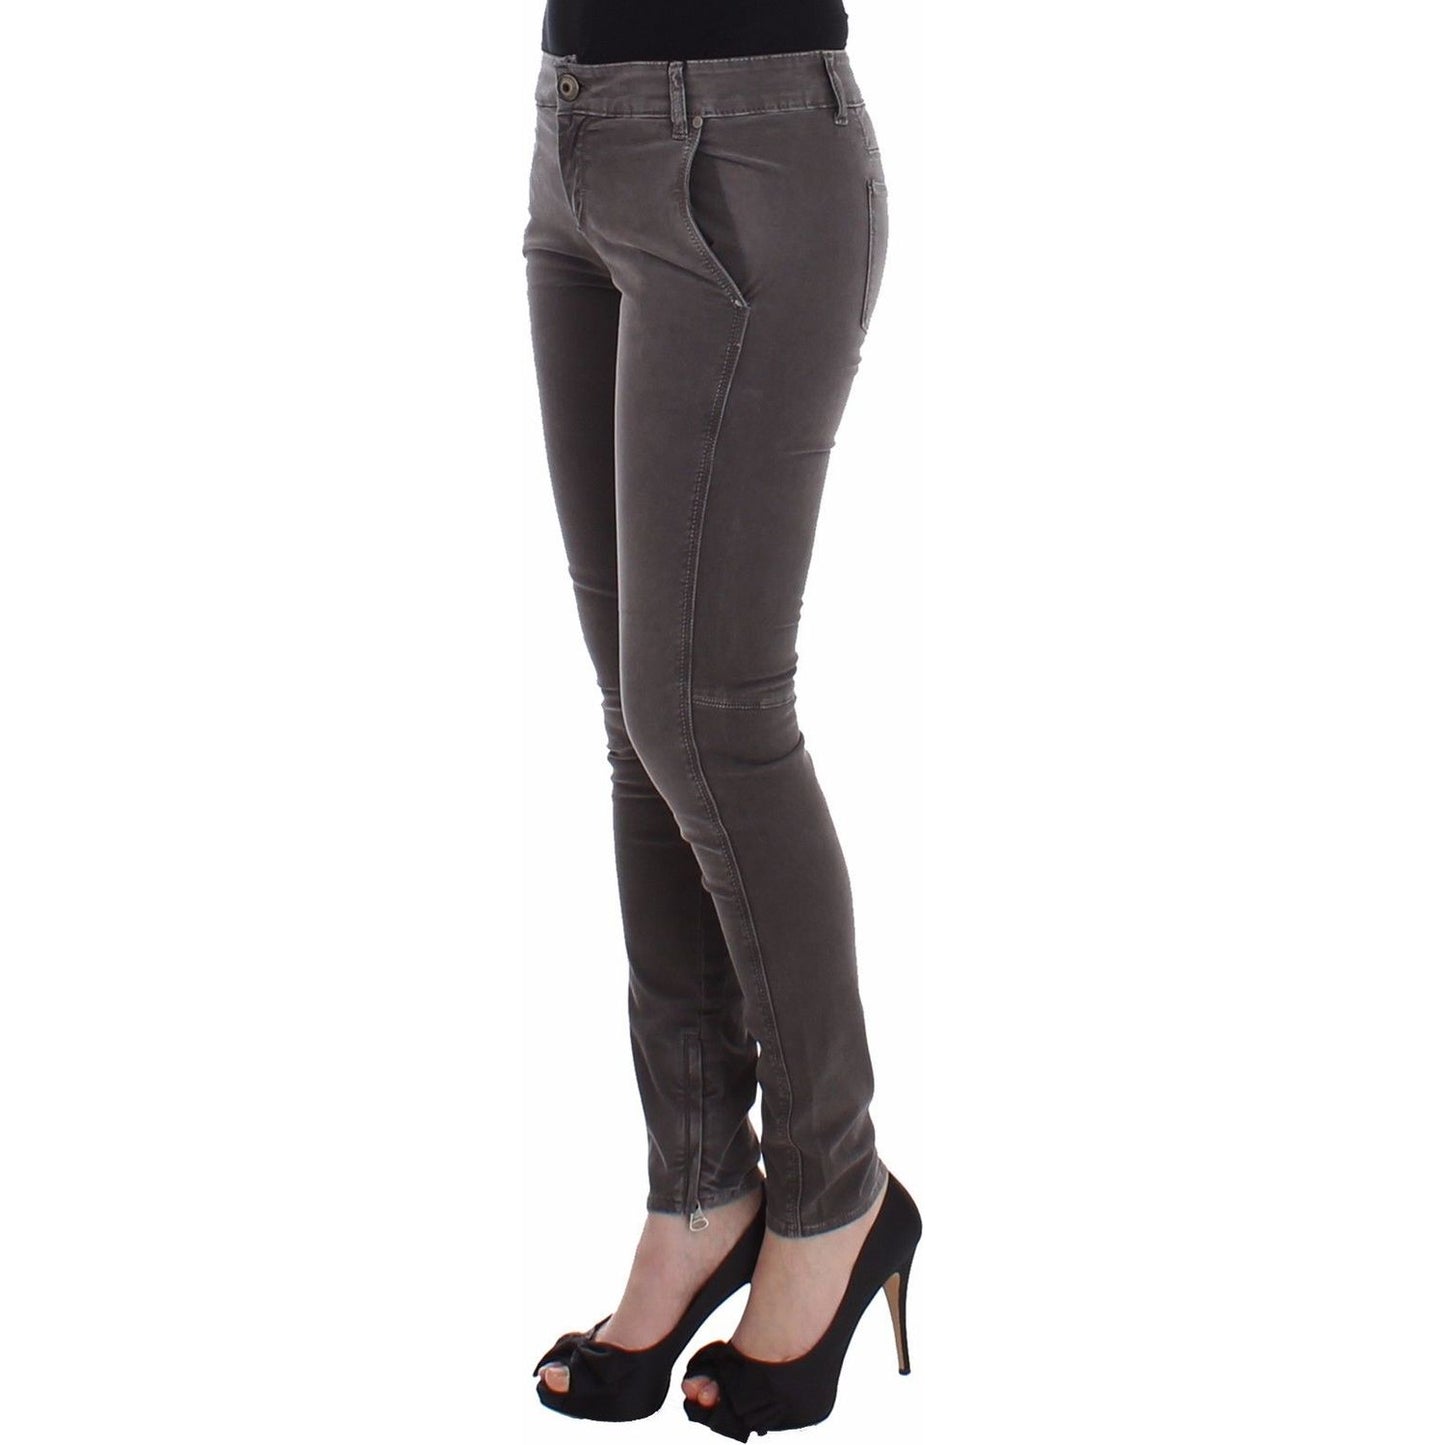 Ermanno Scervino Chic Gray Slim Leg Jeans - Elegance Meets Comfort gray-slim-jeans-denim-pants-skinny-leg-stretch-1 37416-gray-slim-jeans-denim-pants-skinny-leg-stretch-2-1.jpg